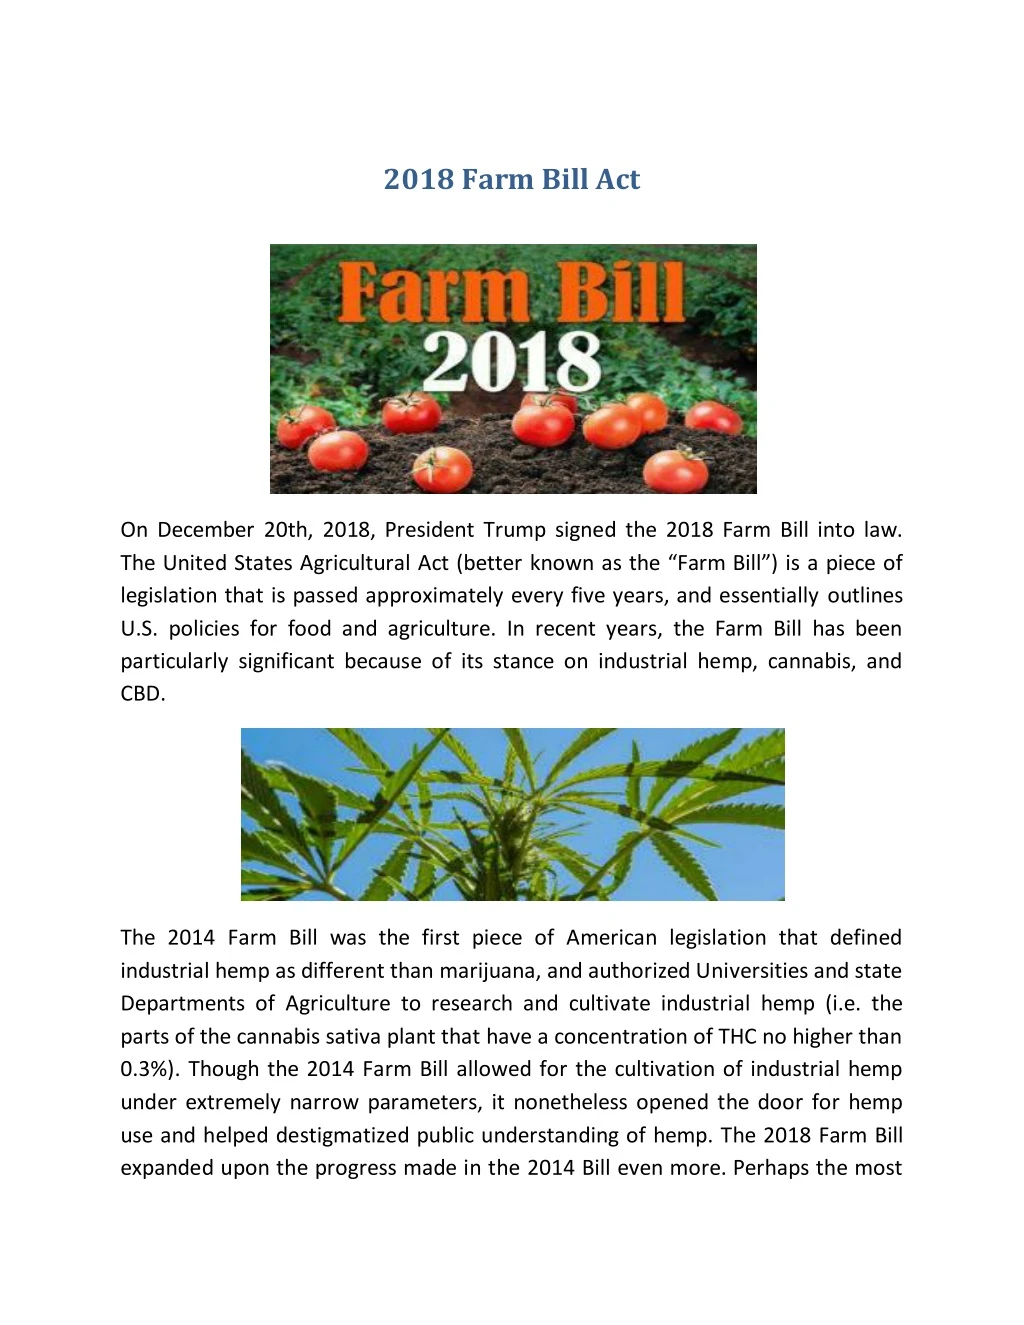 2018 farm bill act